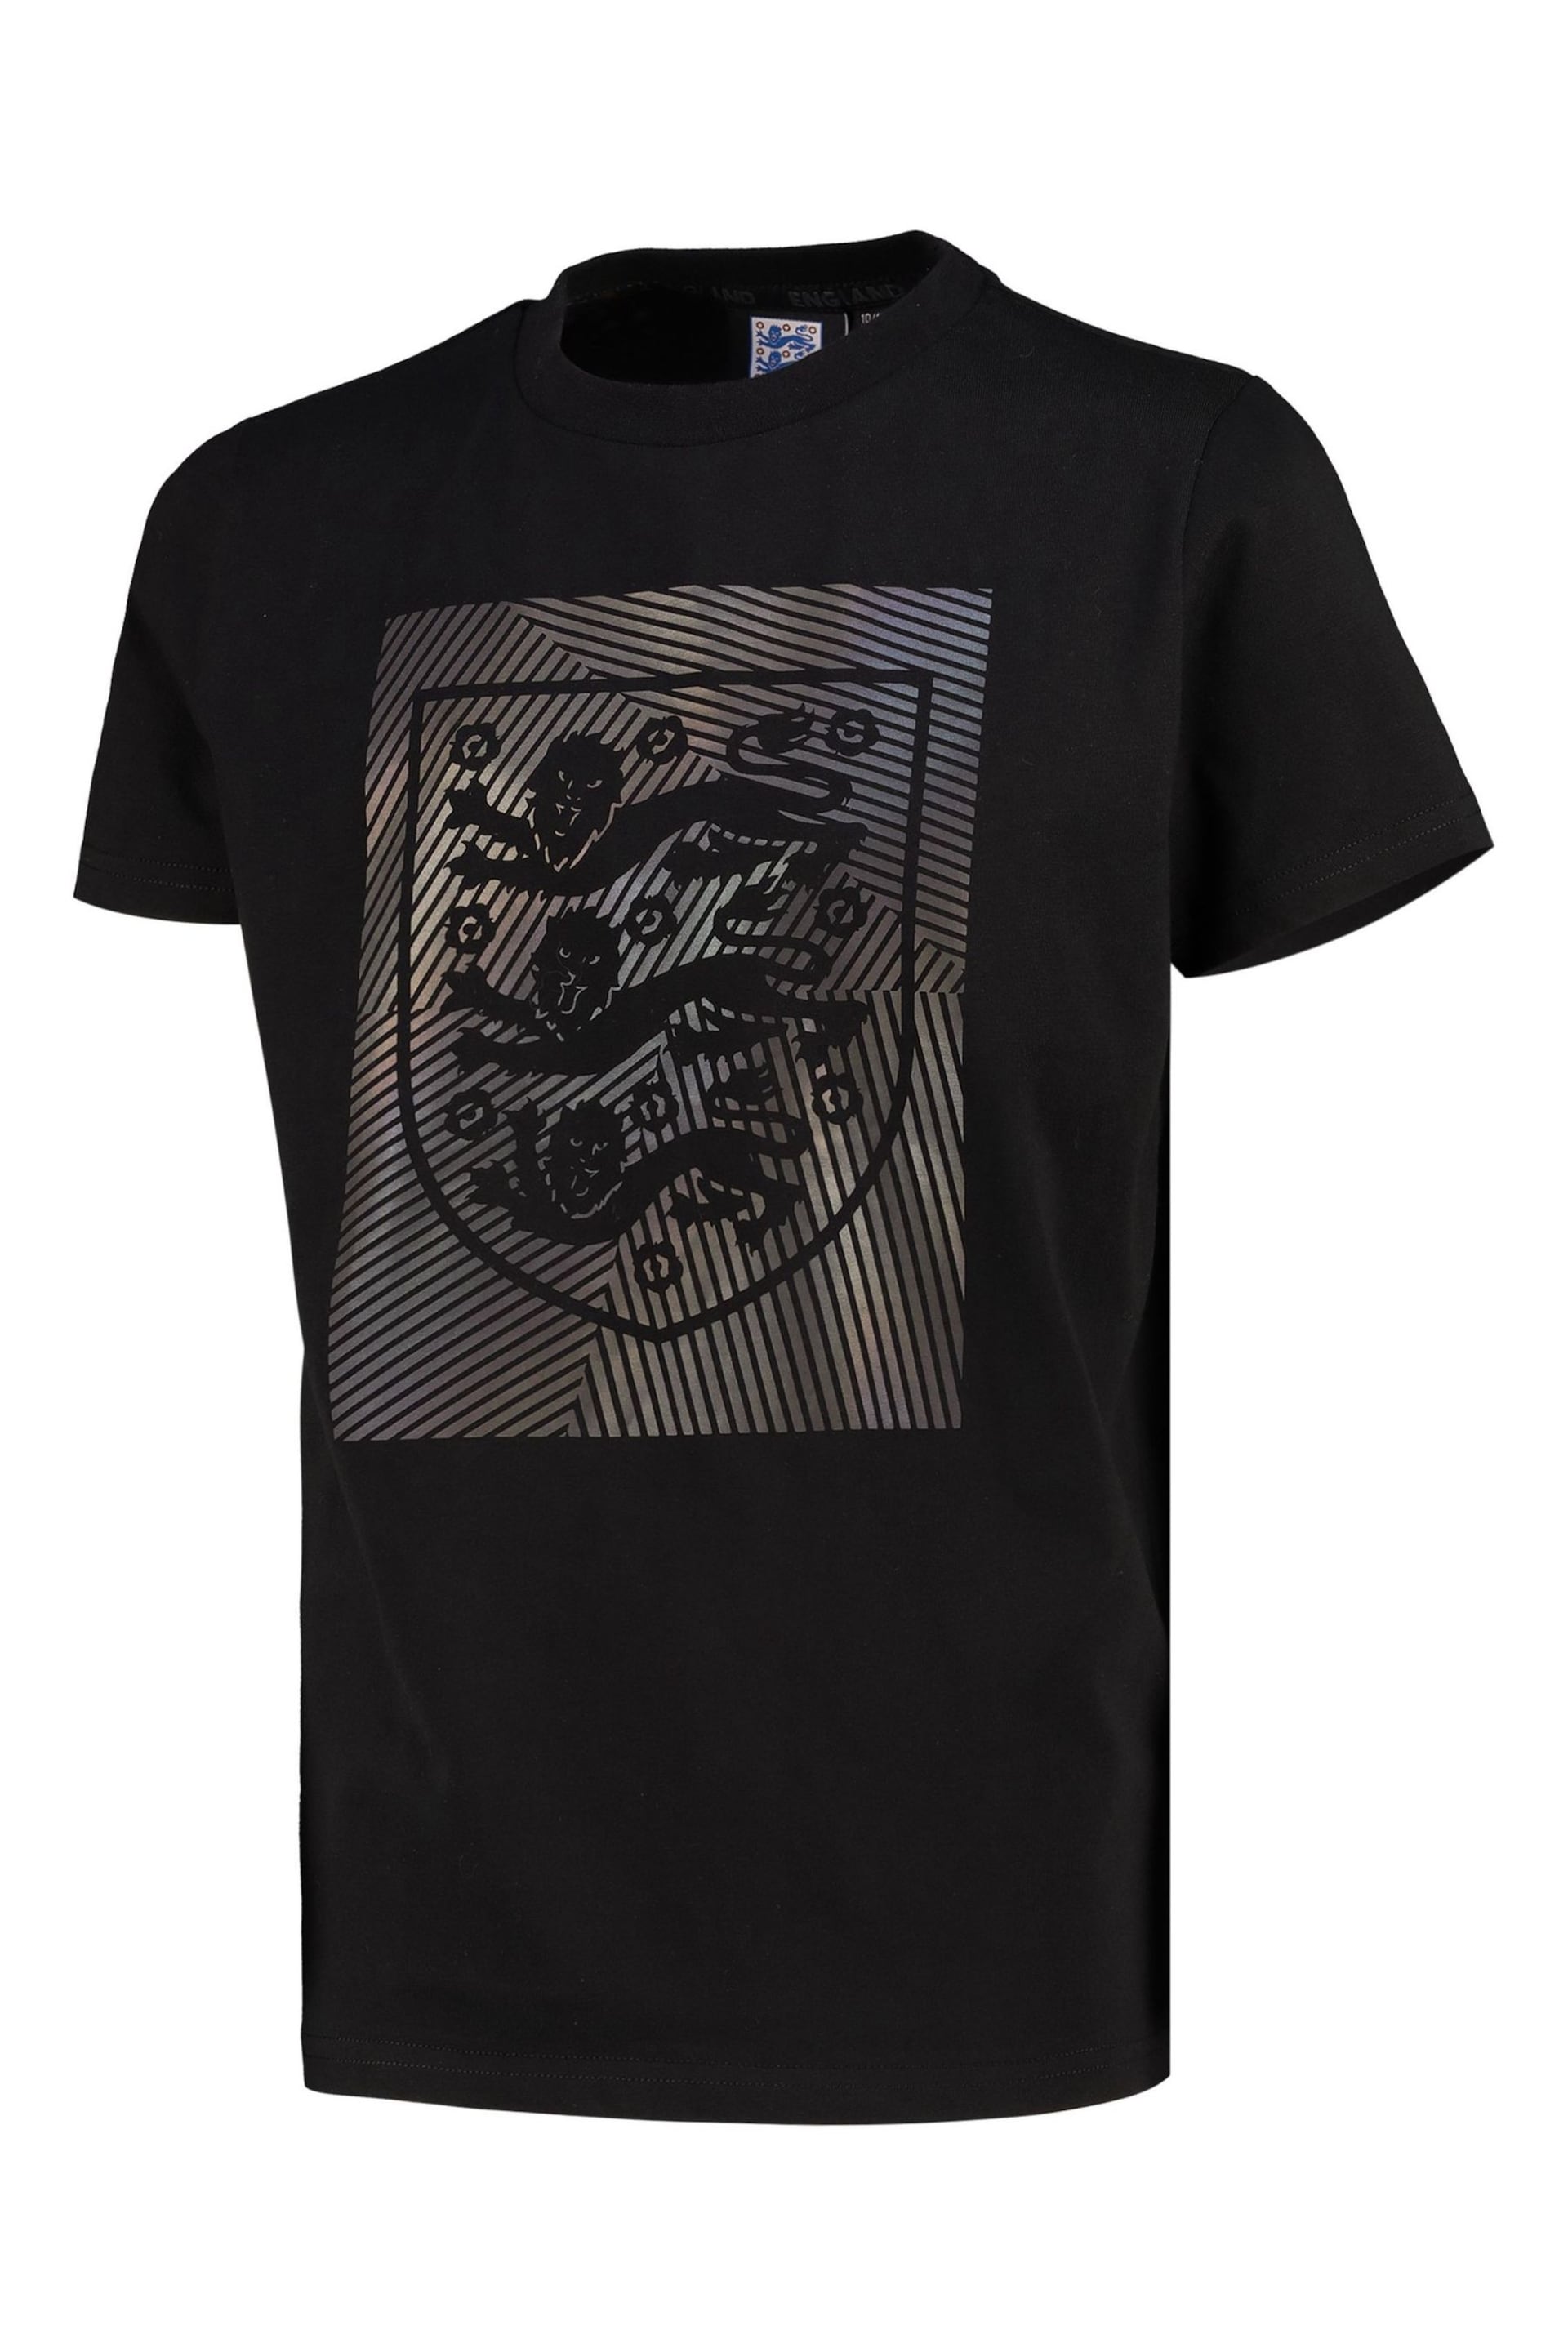 adidas Black England Tonal Reflective Graphic T-Shirt - Image 2 of 3